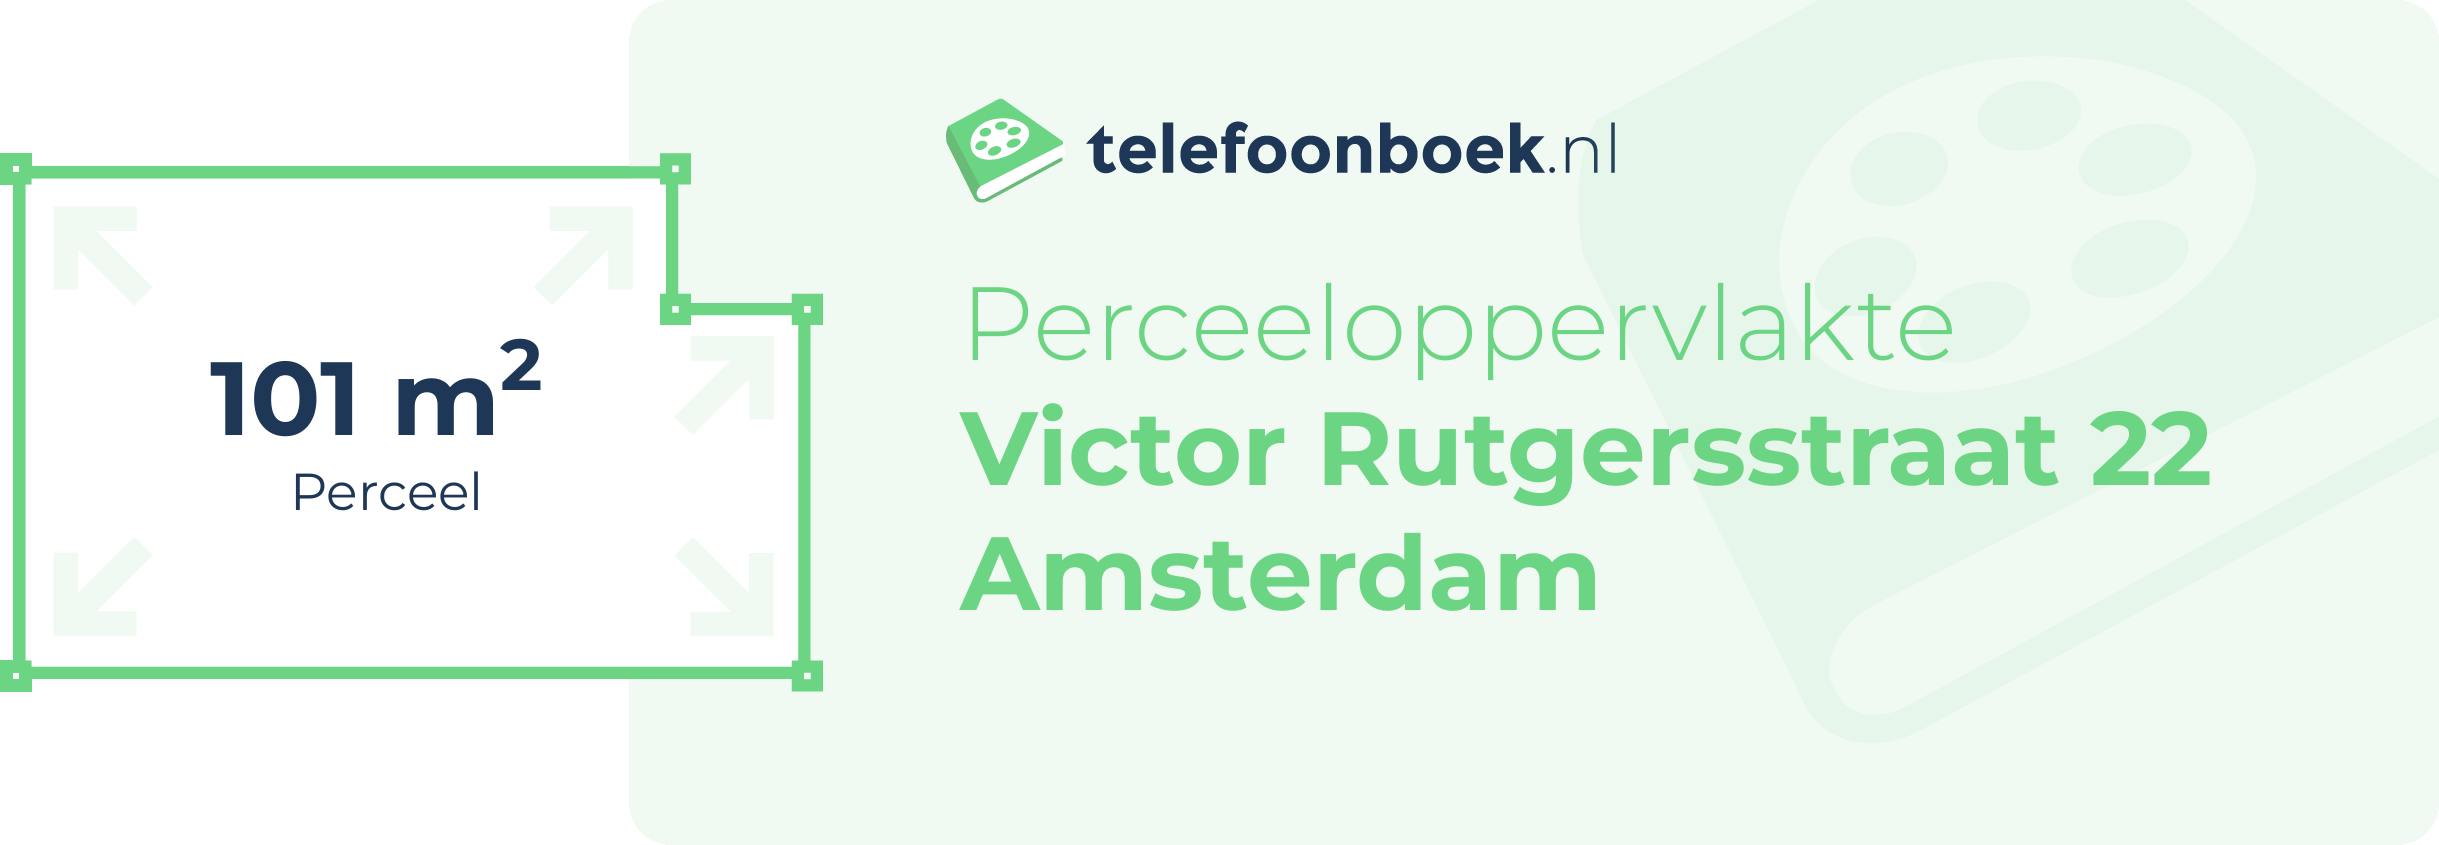 Perceeloppervlakte Victor Rutgersstraat 22 Amsterdam